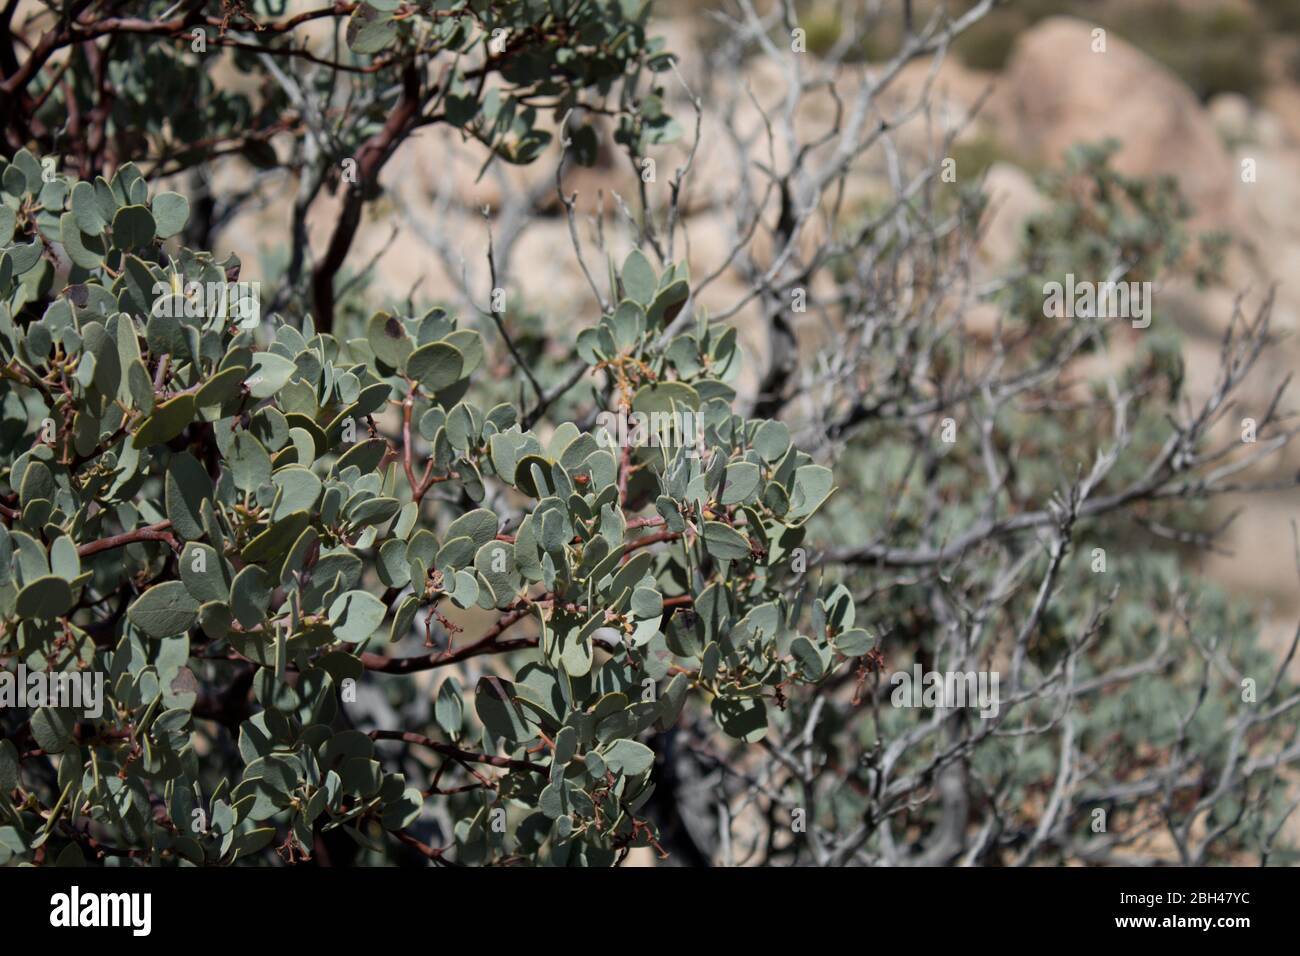 Big Berry Manzanita, Arctostaphylos Glauca, native shrub of Pioneertown Mountains Preserve in the Southern Mojave Desert. Stock Photo